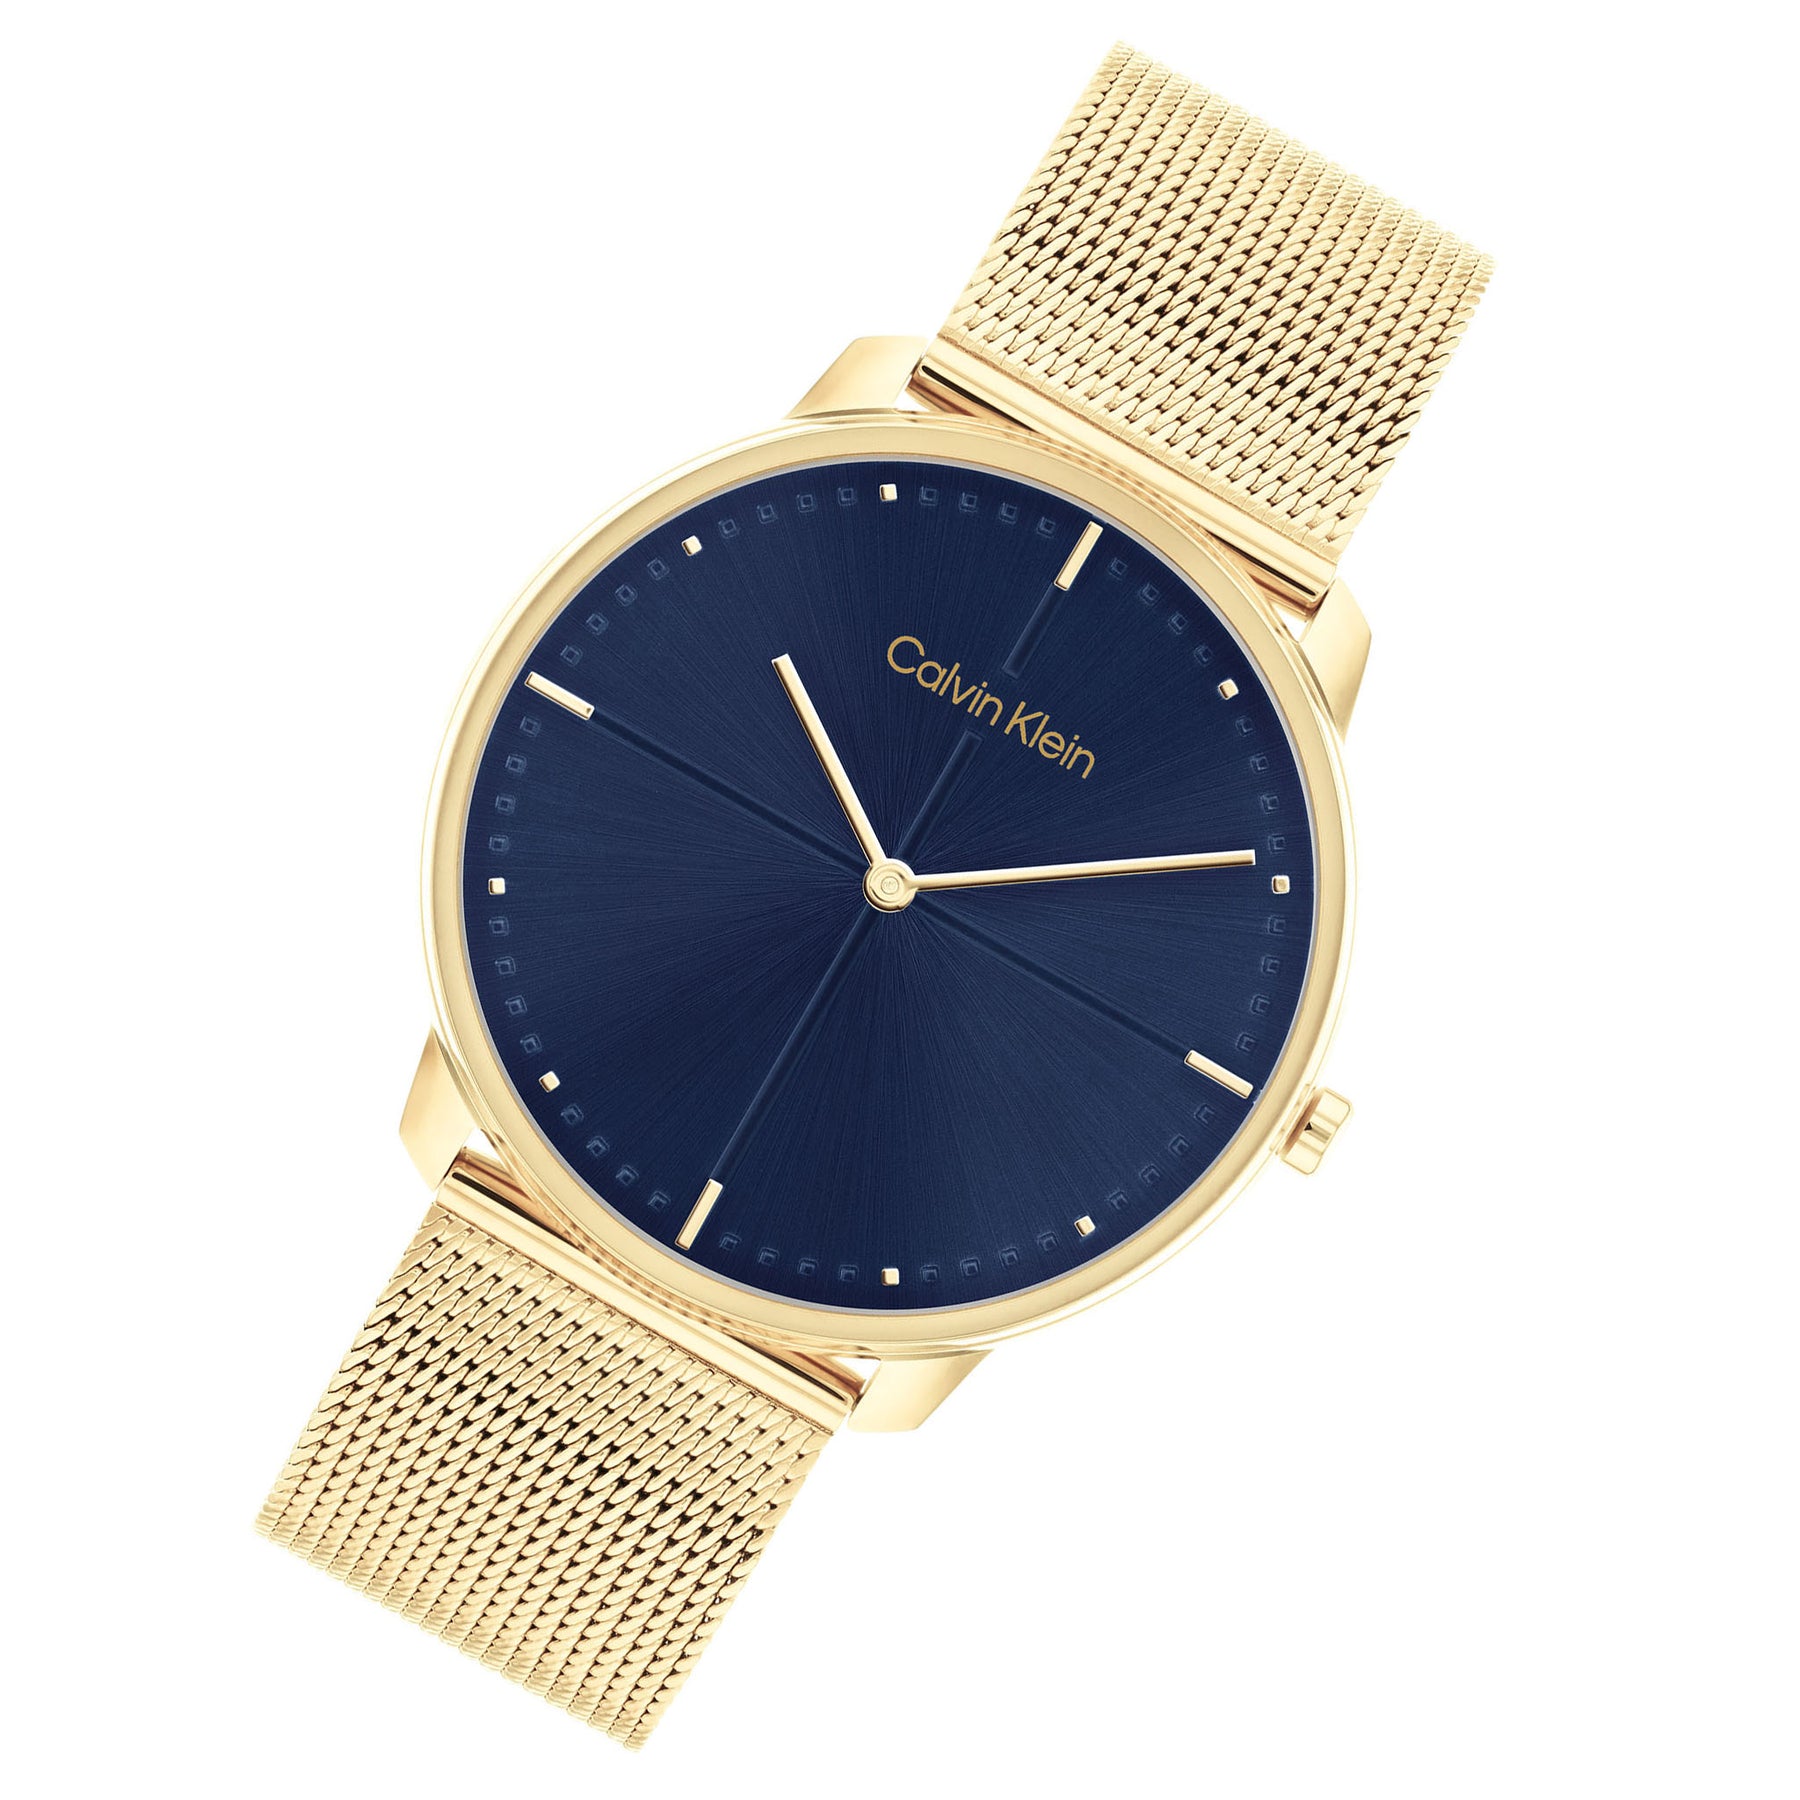 Calvin Klein Gold Mesh - – The Unisex 25200153 Australia Factory Watch Watch Dial Blue